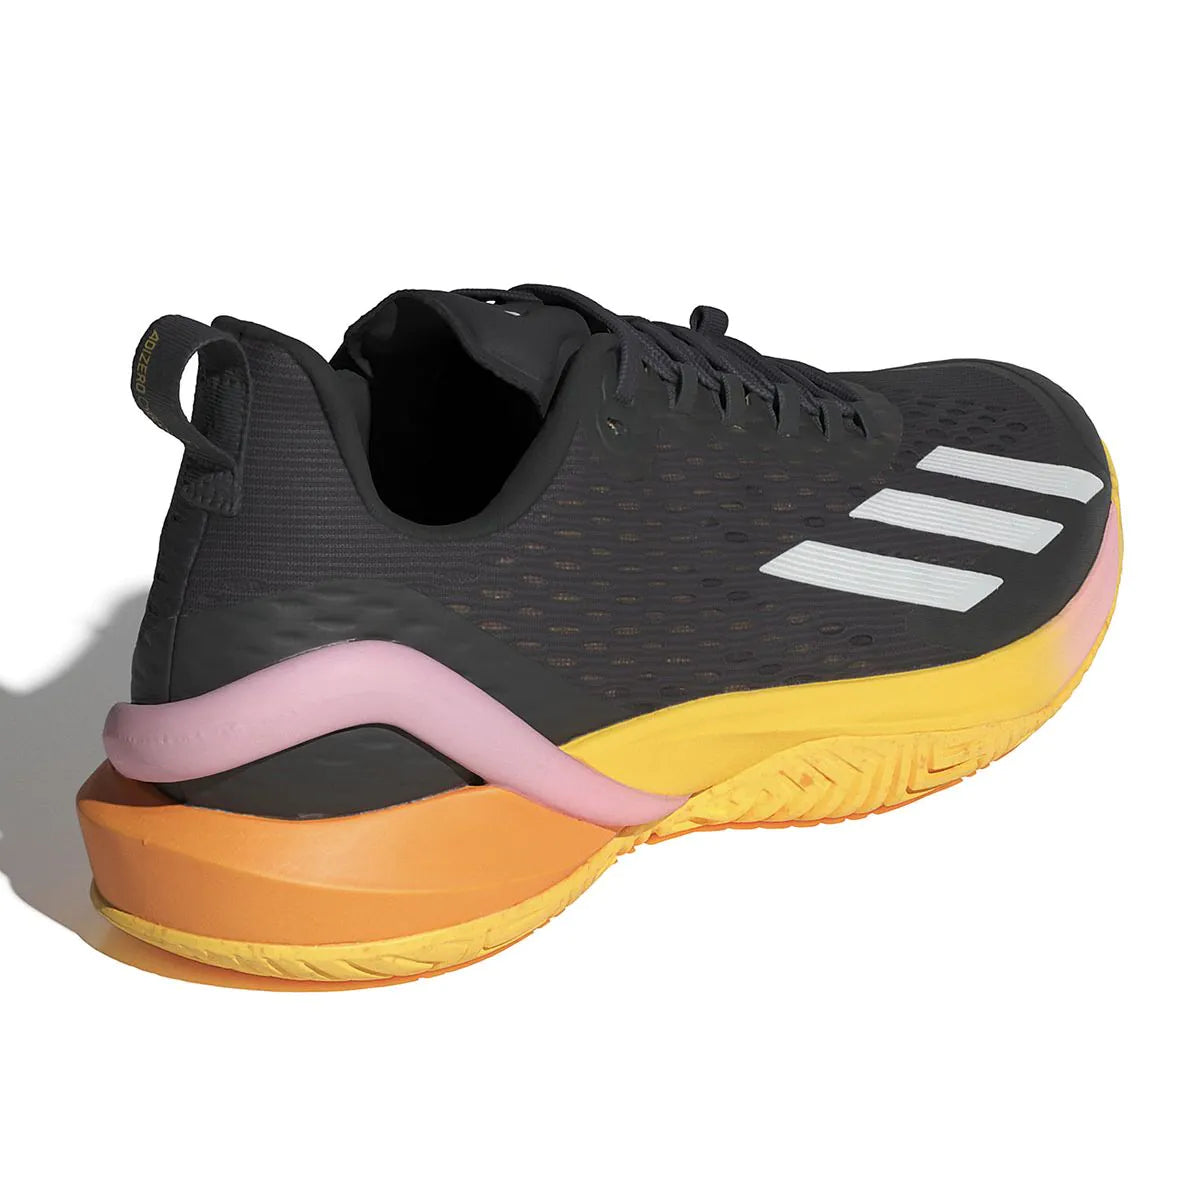 ADIDAS Adizero Cybersonic Mens Tennis Shoes - Aurora Black / Zero Metallic / Spark - Heel